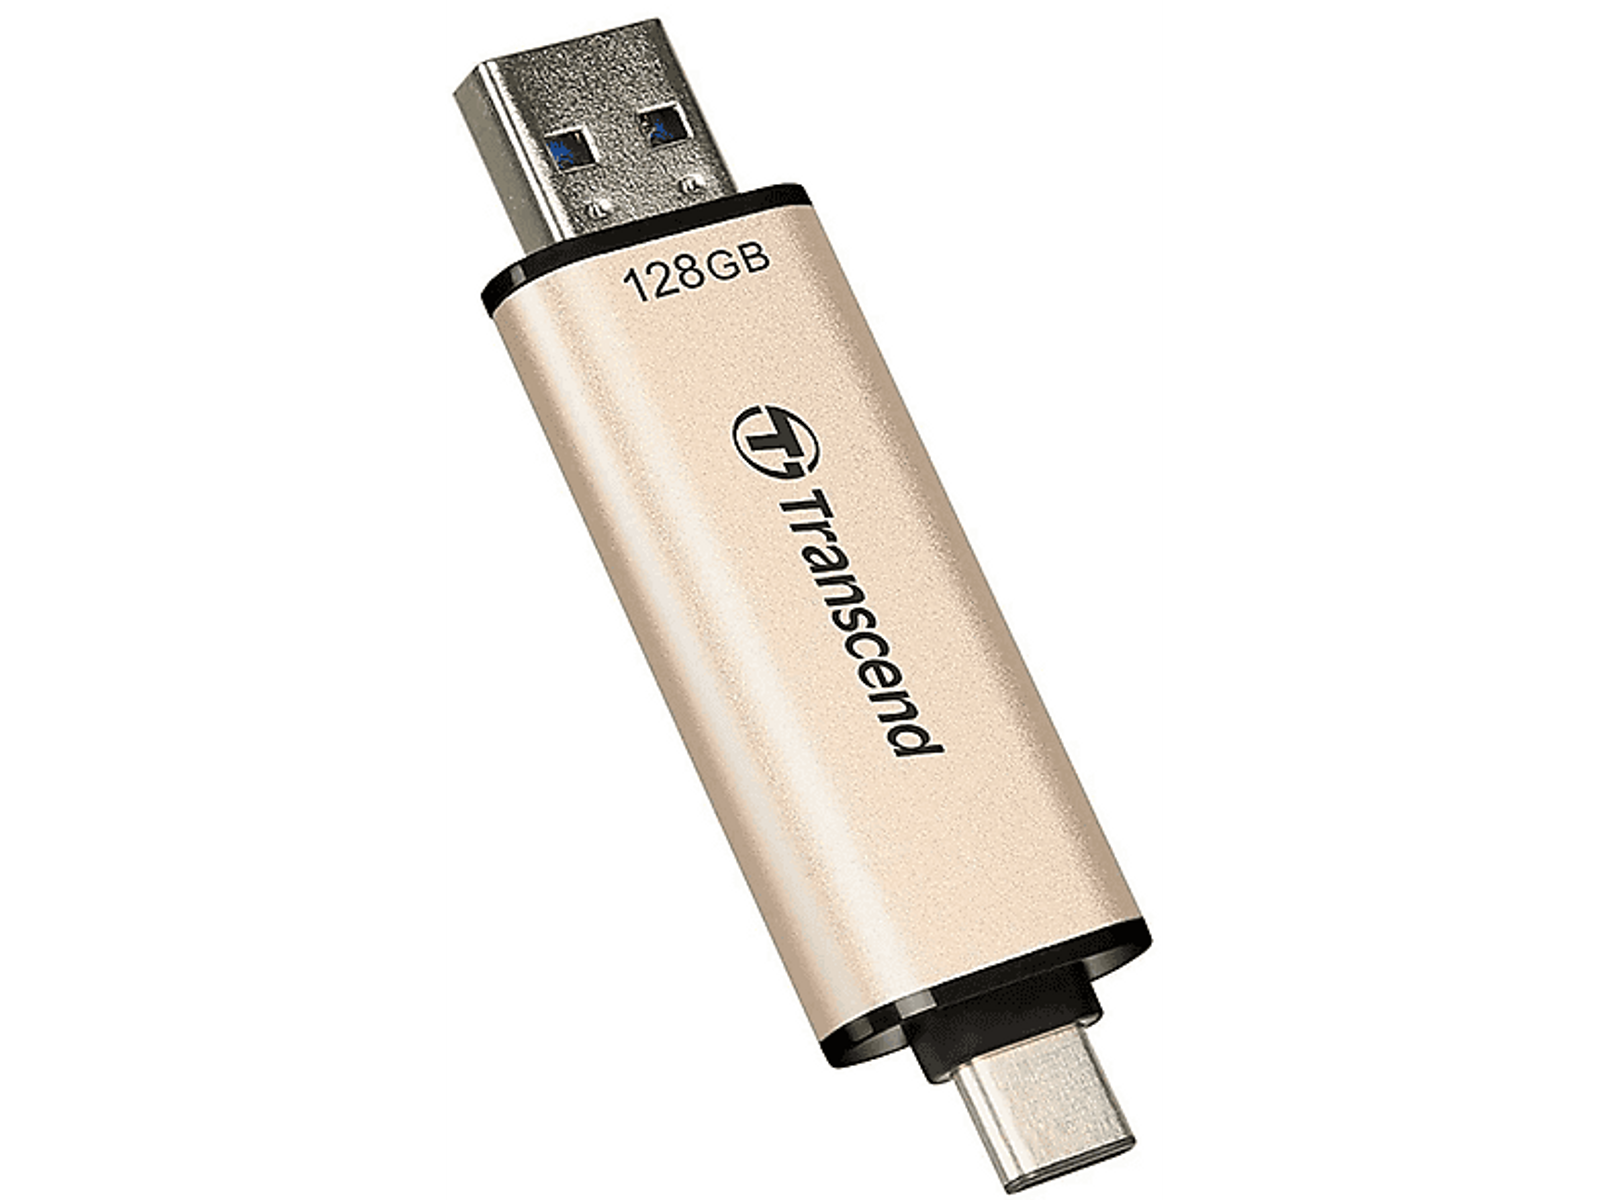 TS128GJF930C GB) (Schwarz, TRANSCEND 128 USB-Flash-Laufwerk